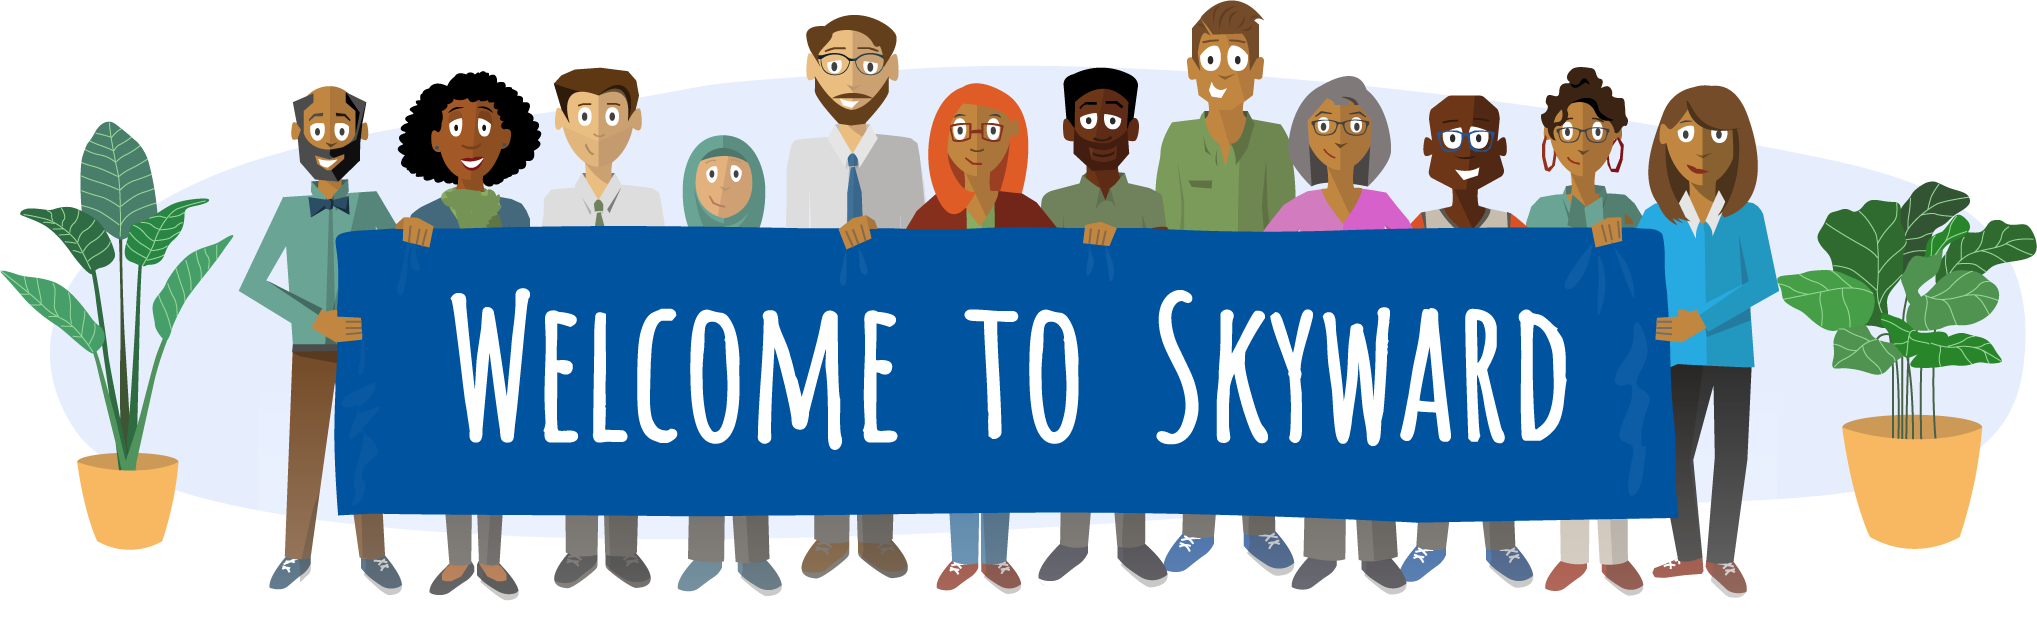 Welcome to Skyward